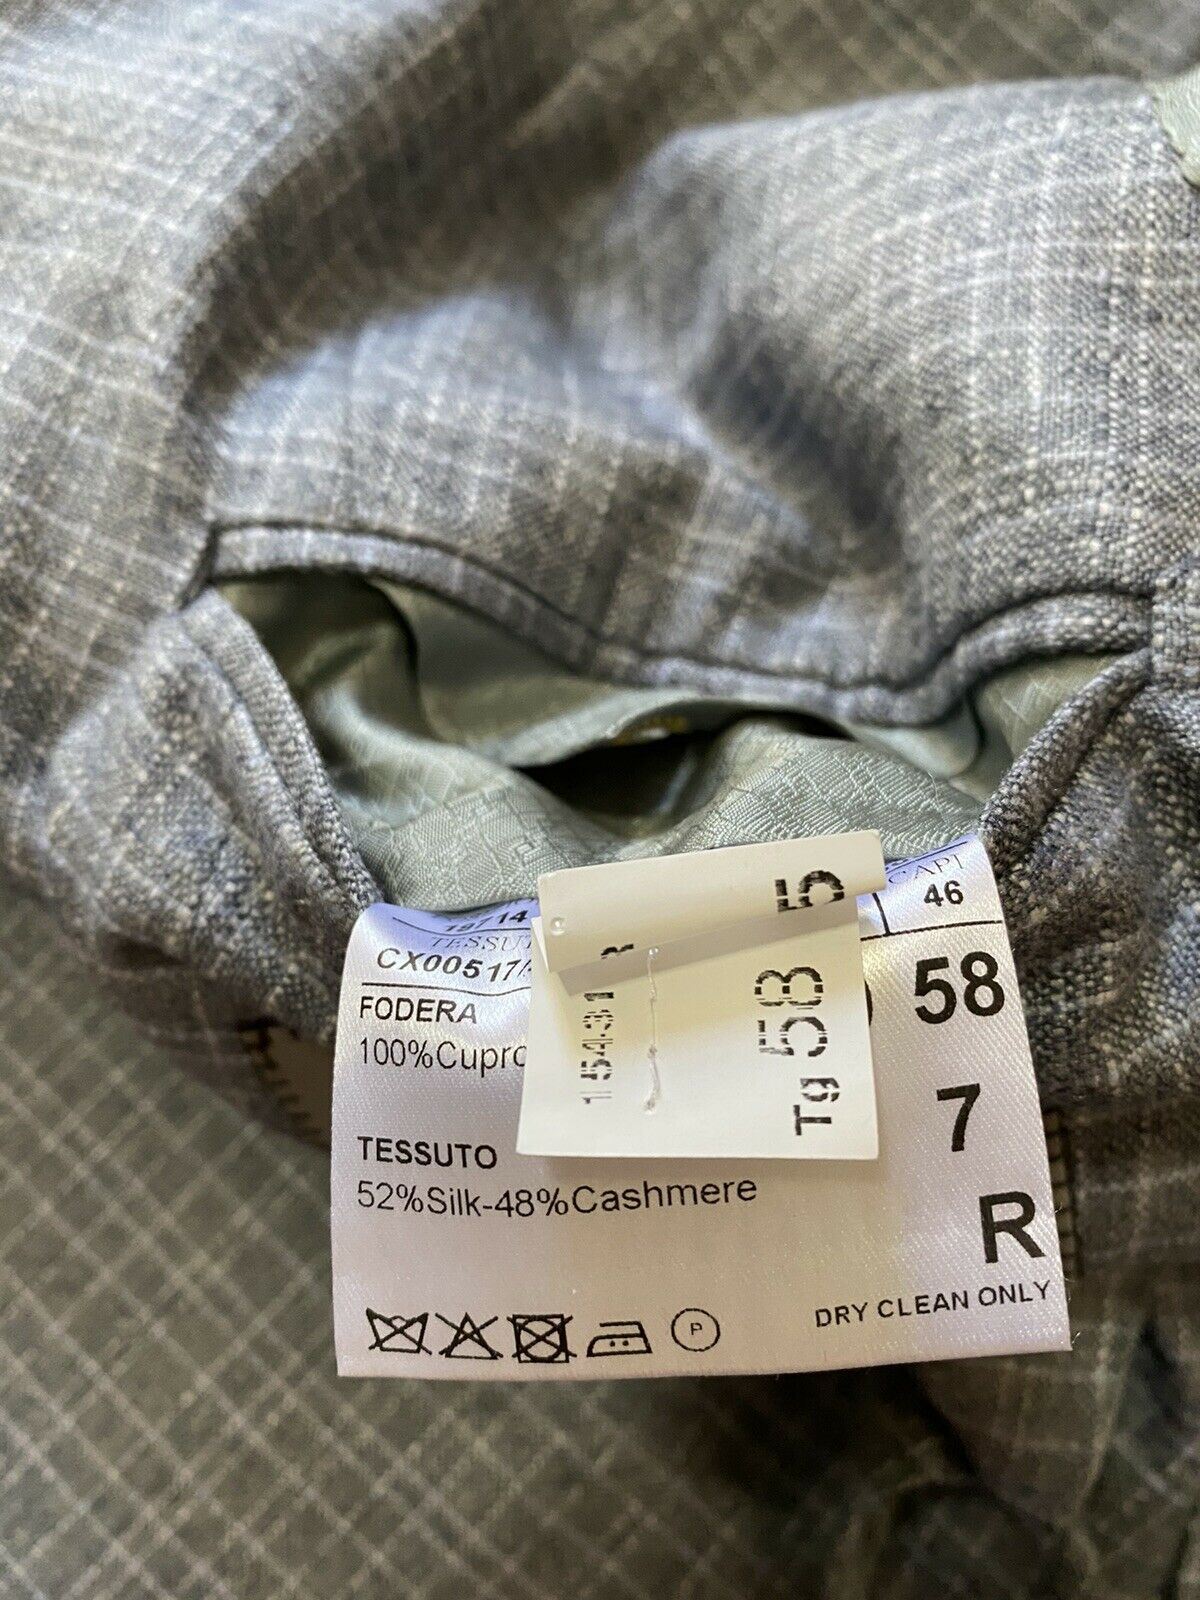 NWT $2295 Canali Kei Men Silk/Cashmere Jacket Blazer Gray 46R US/58R Eu Italy